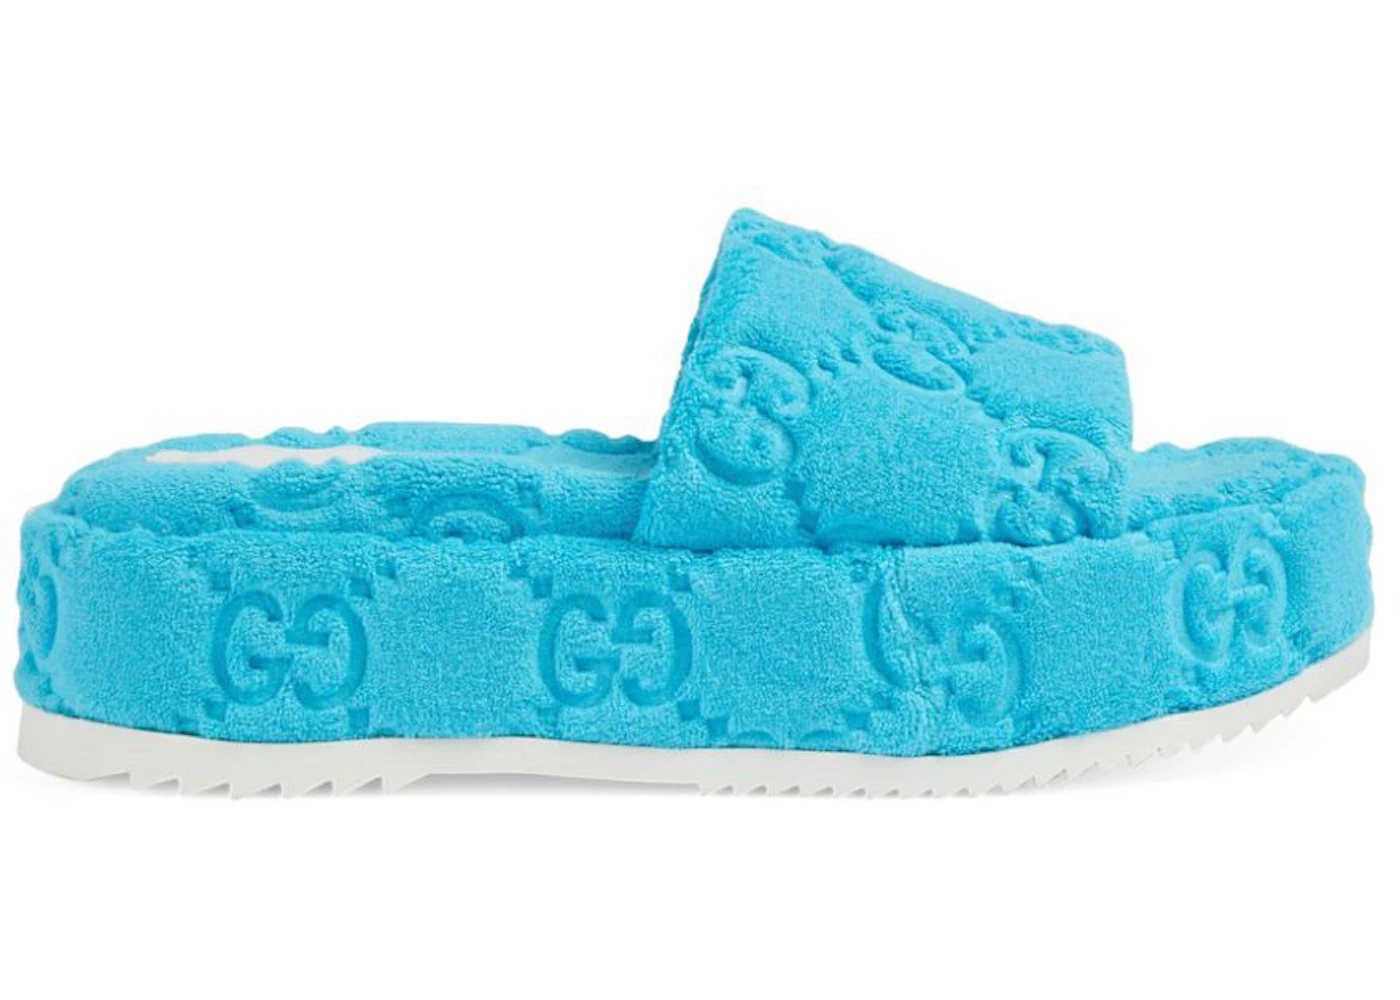 Gucci GG Platform Sandal Blue (Women's) - 700599 U2O00 4917 - US